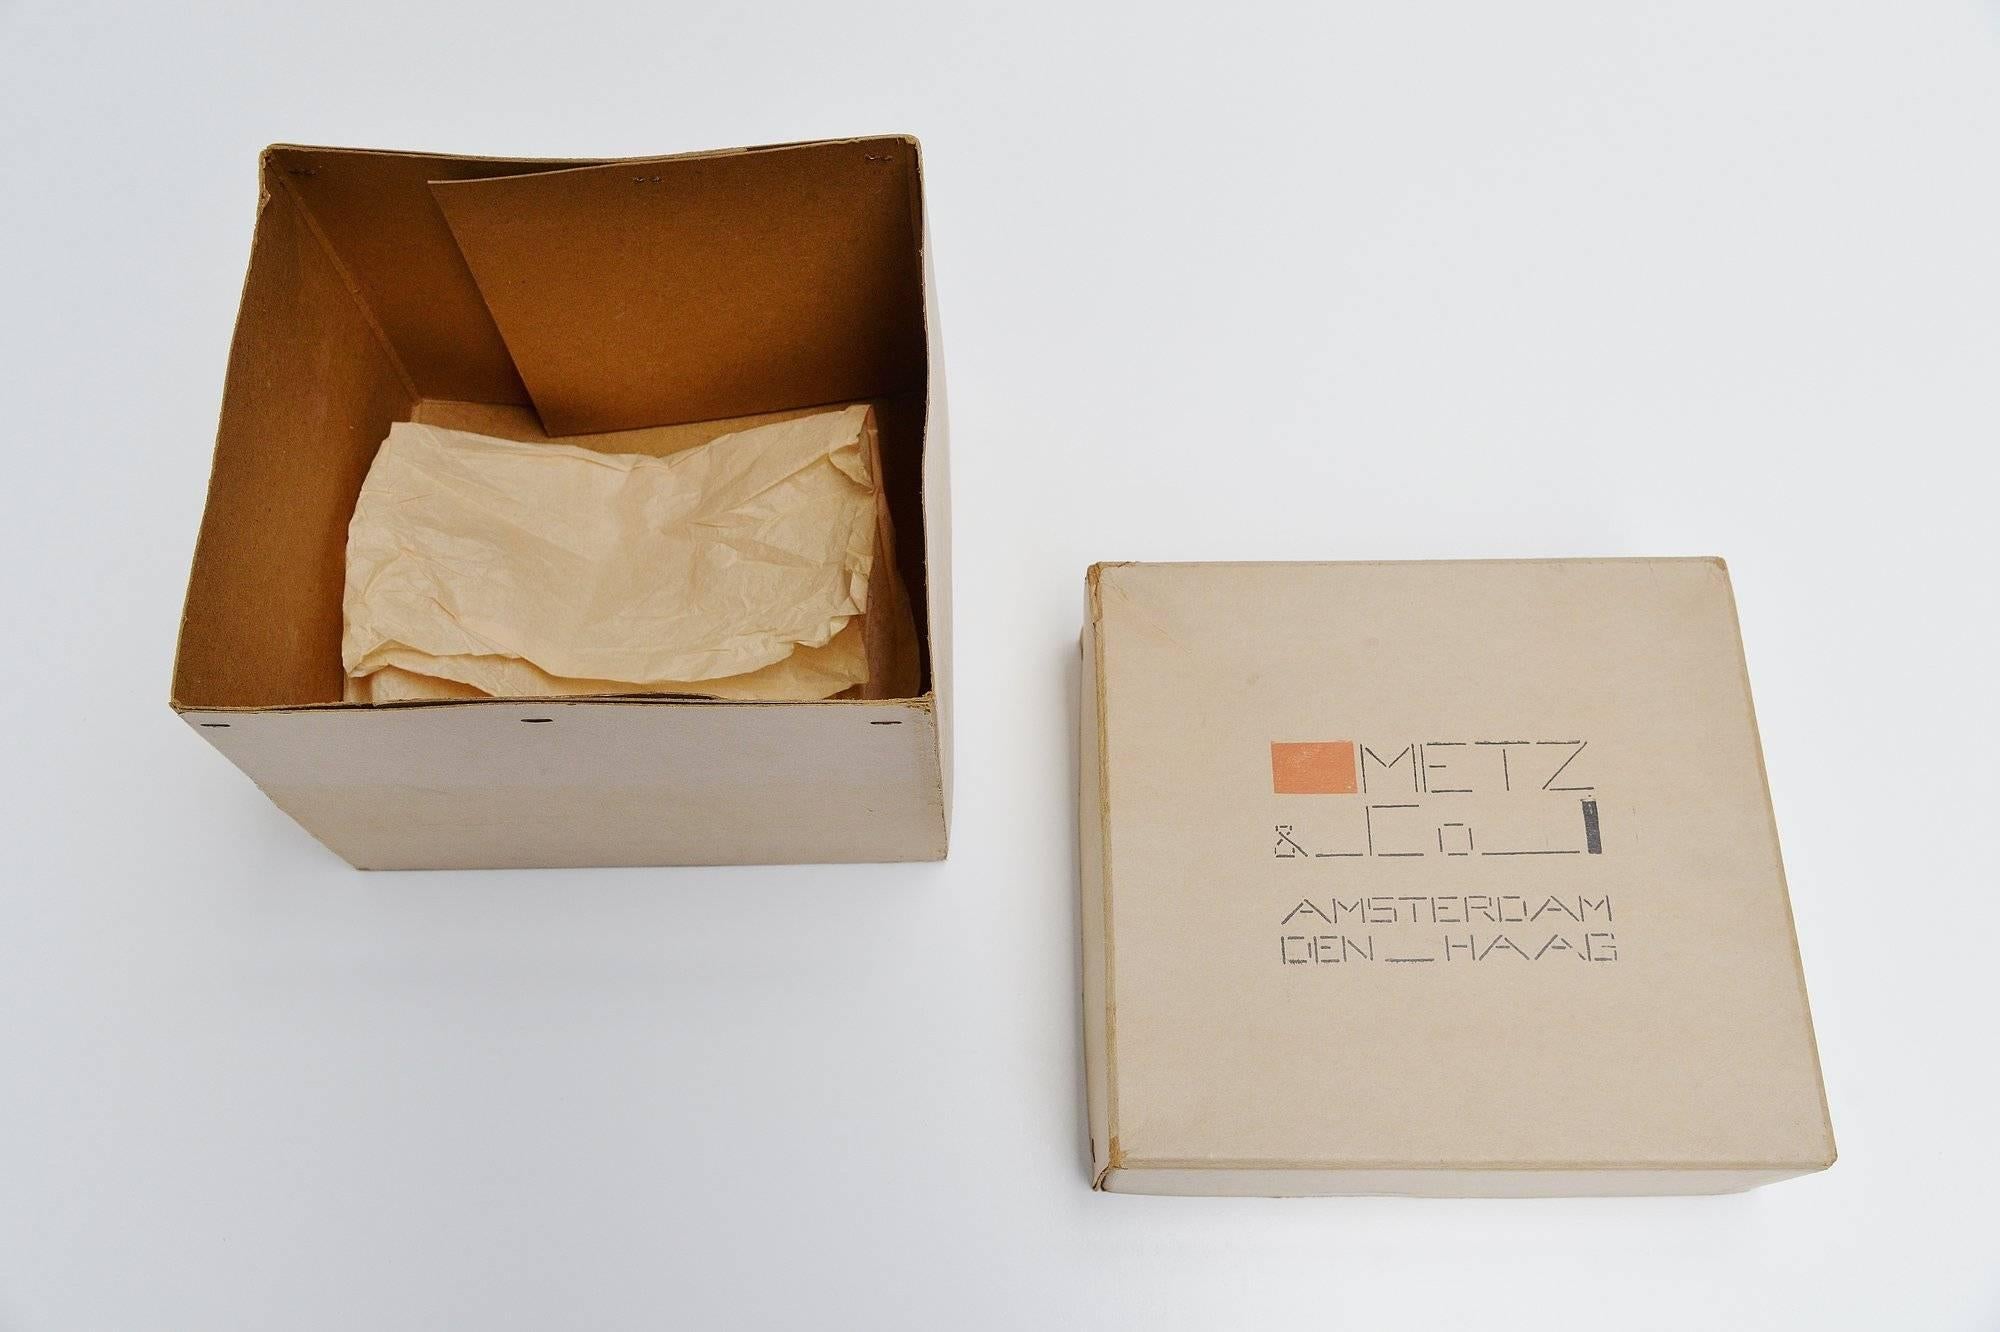 Paper Bart van der Leck Packaging Box Metz & Co Holland, 1935